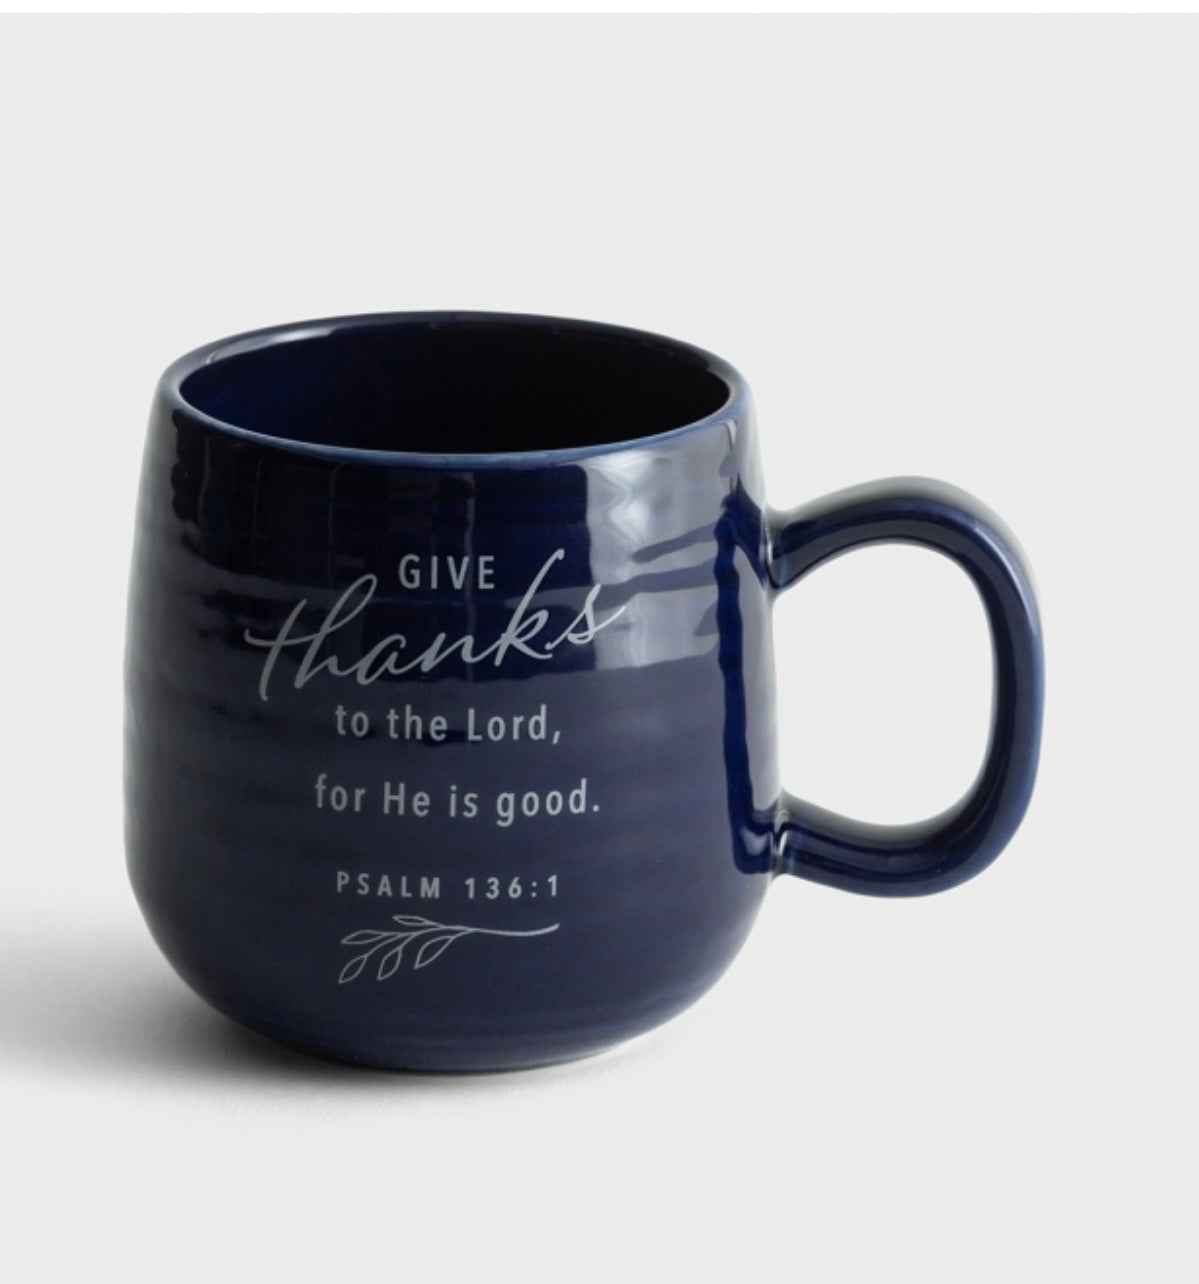 Grateful Thankful Blessed - Ceramic Mug